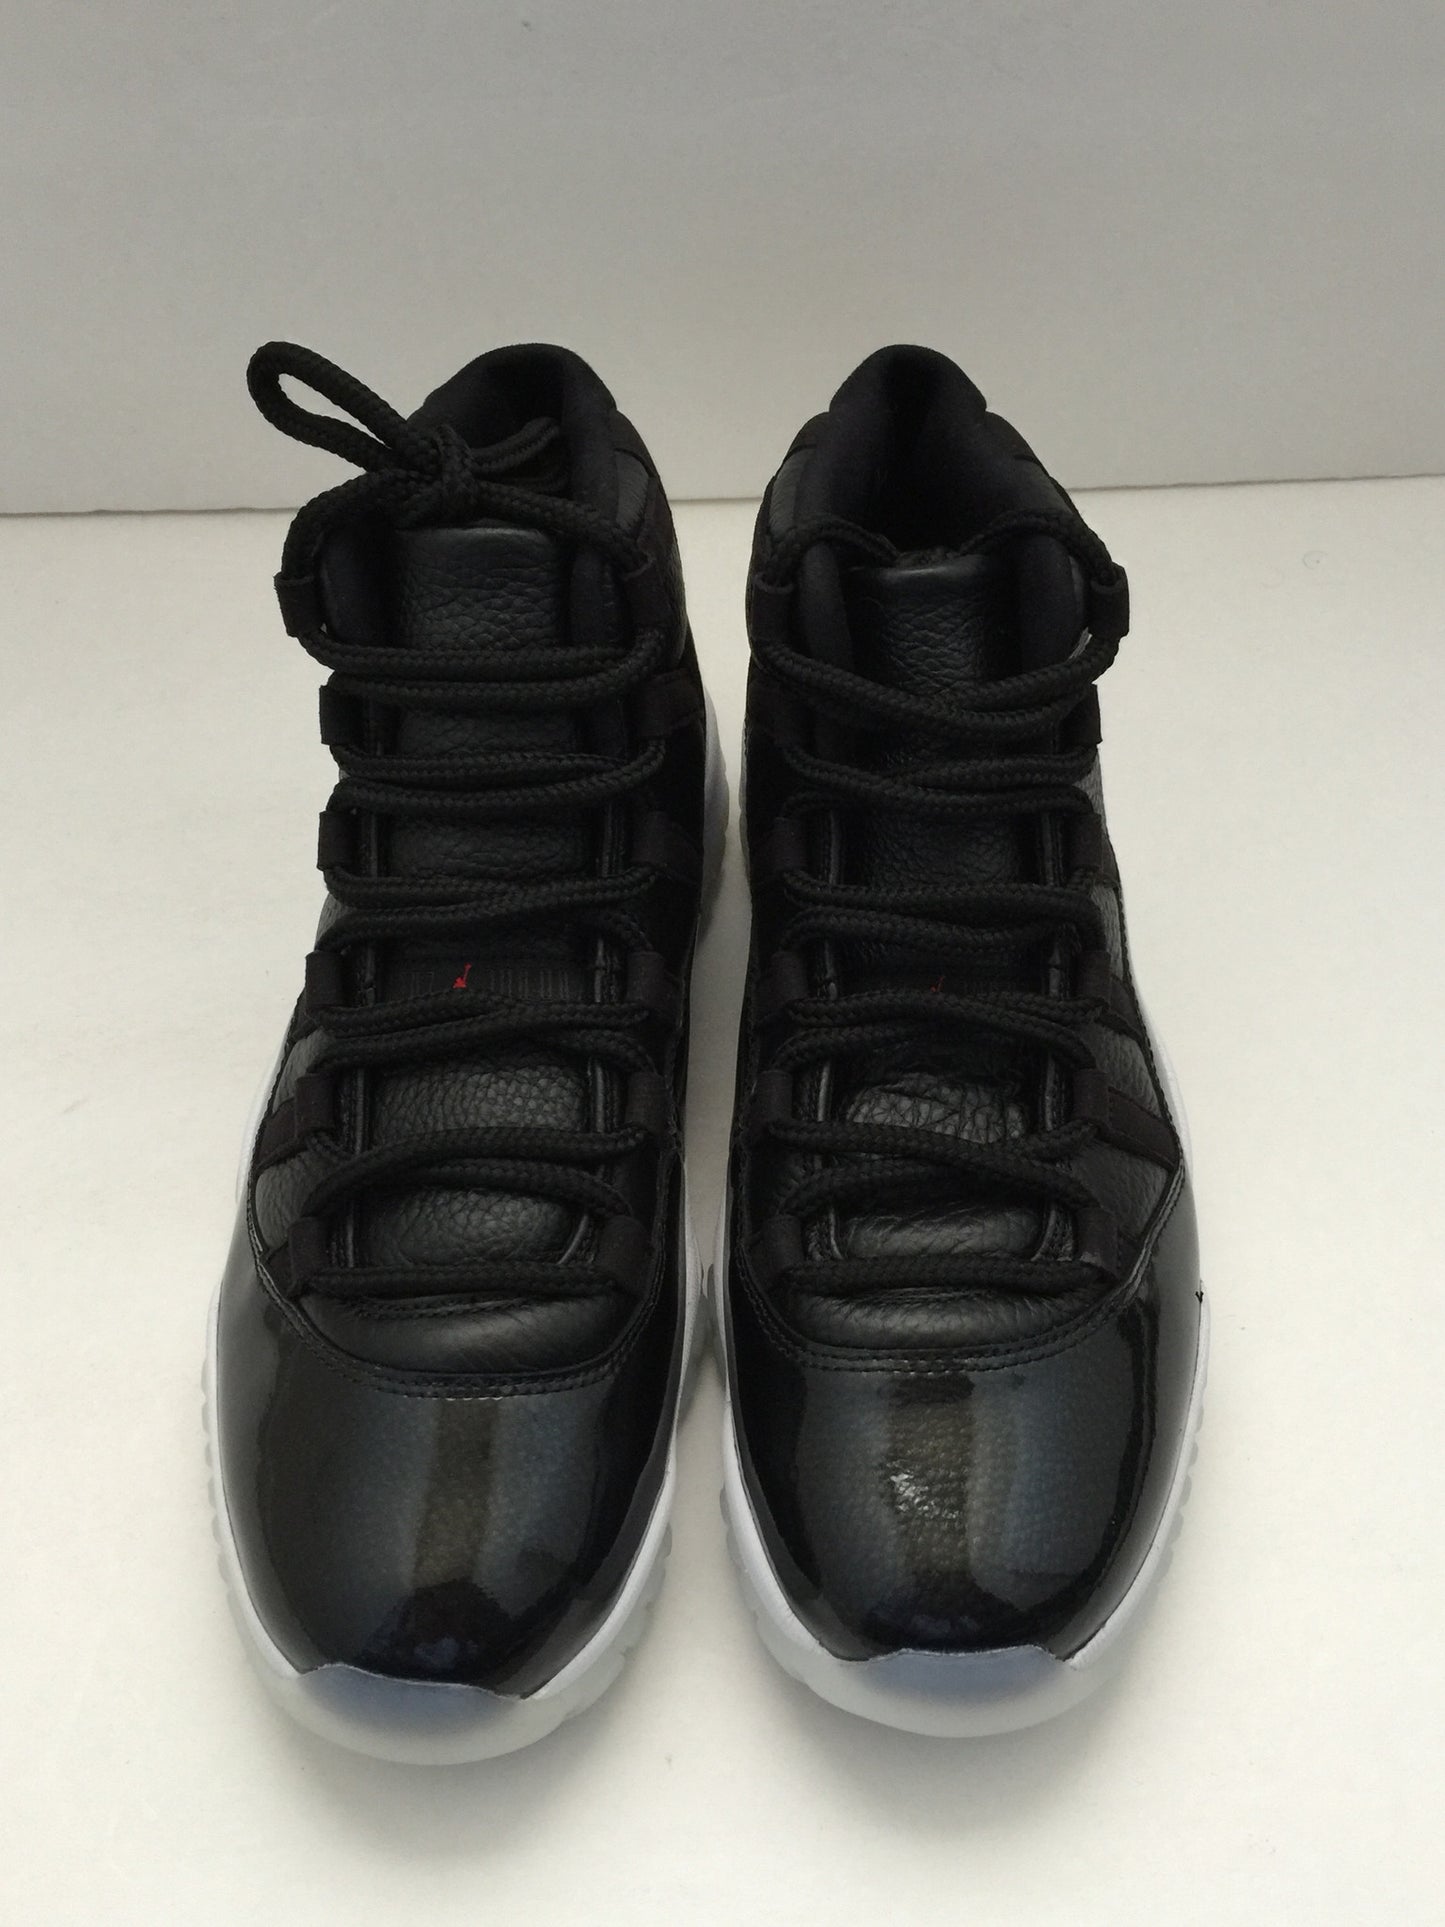 DS Nike Air Jordan 11 XI Retro 72-10 Size 8.5/Size 9/ Size 10 - DOPEFOOT
 - 3